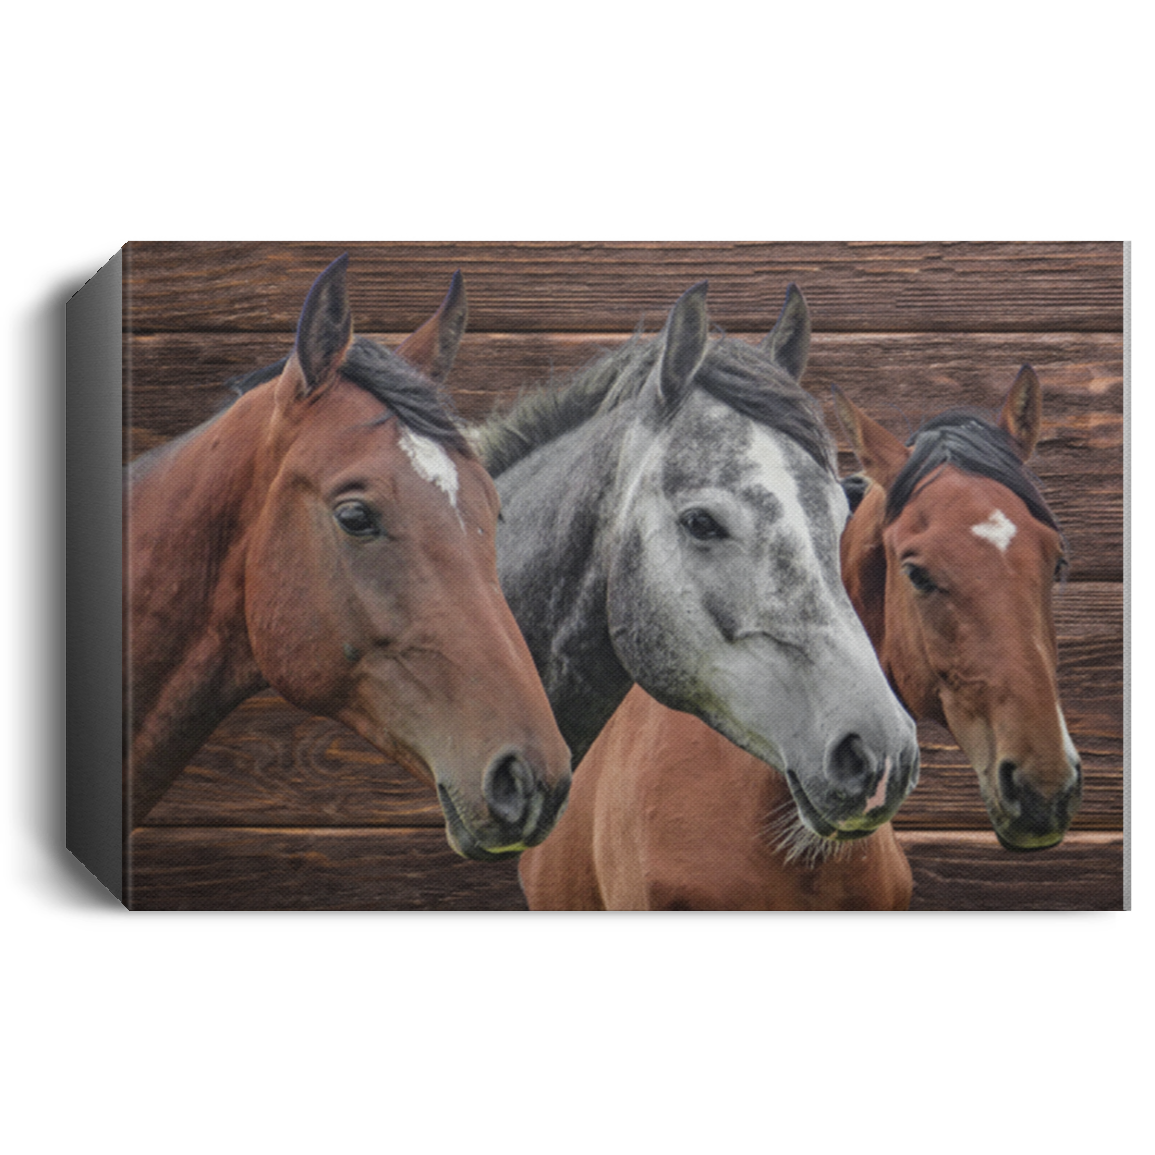 We Three Horses Canvas Print - MyAllOutHorses